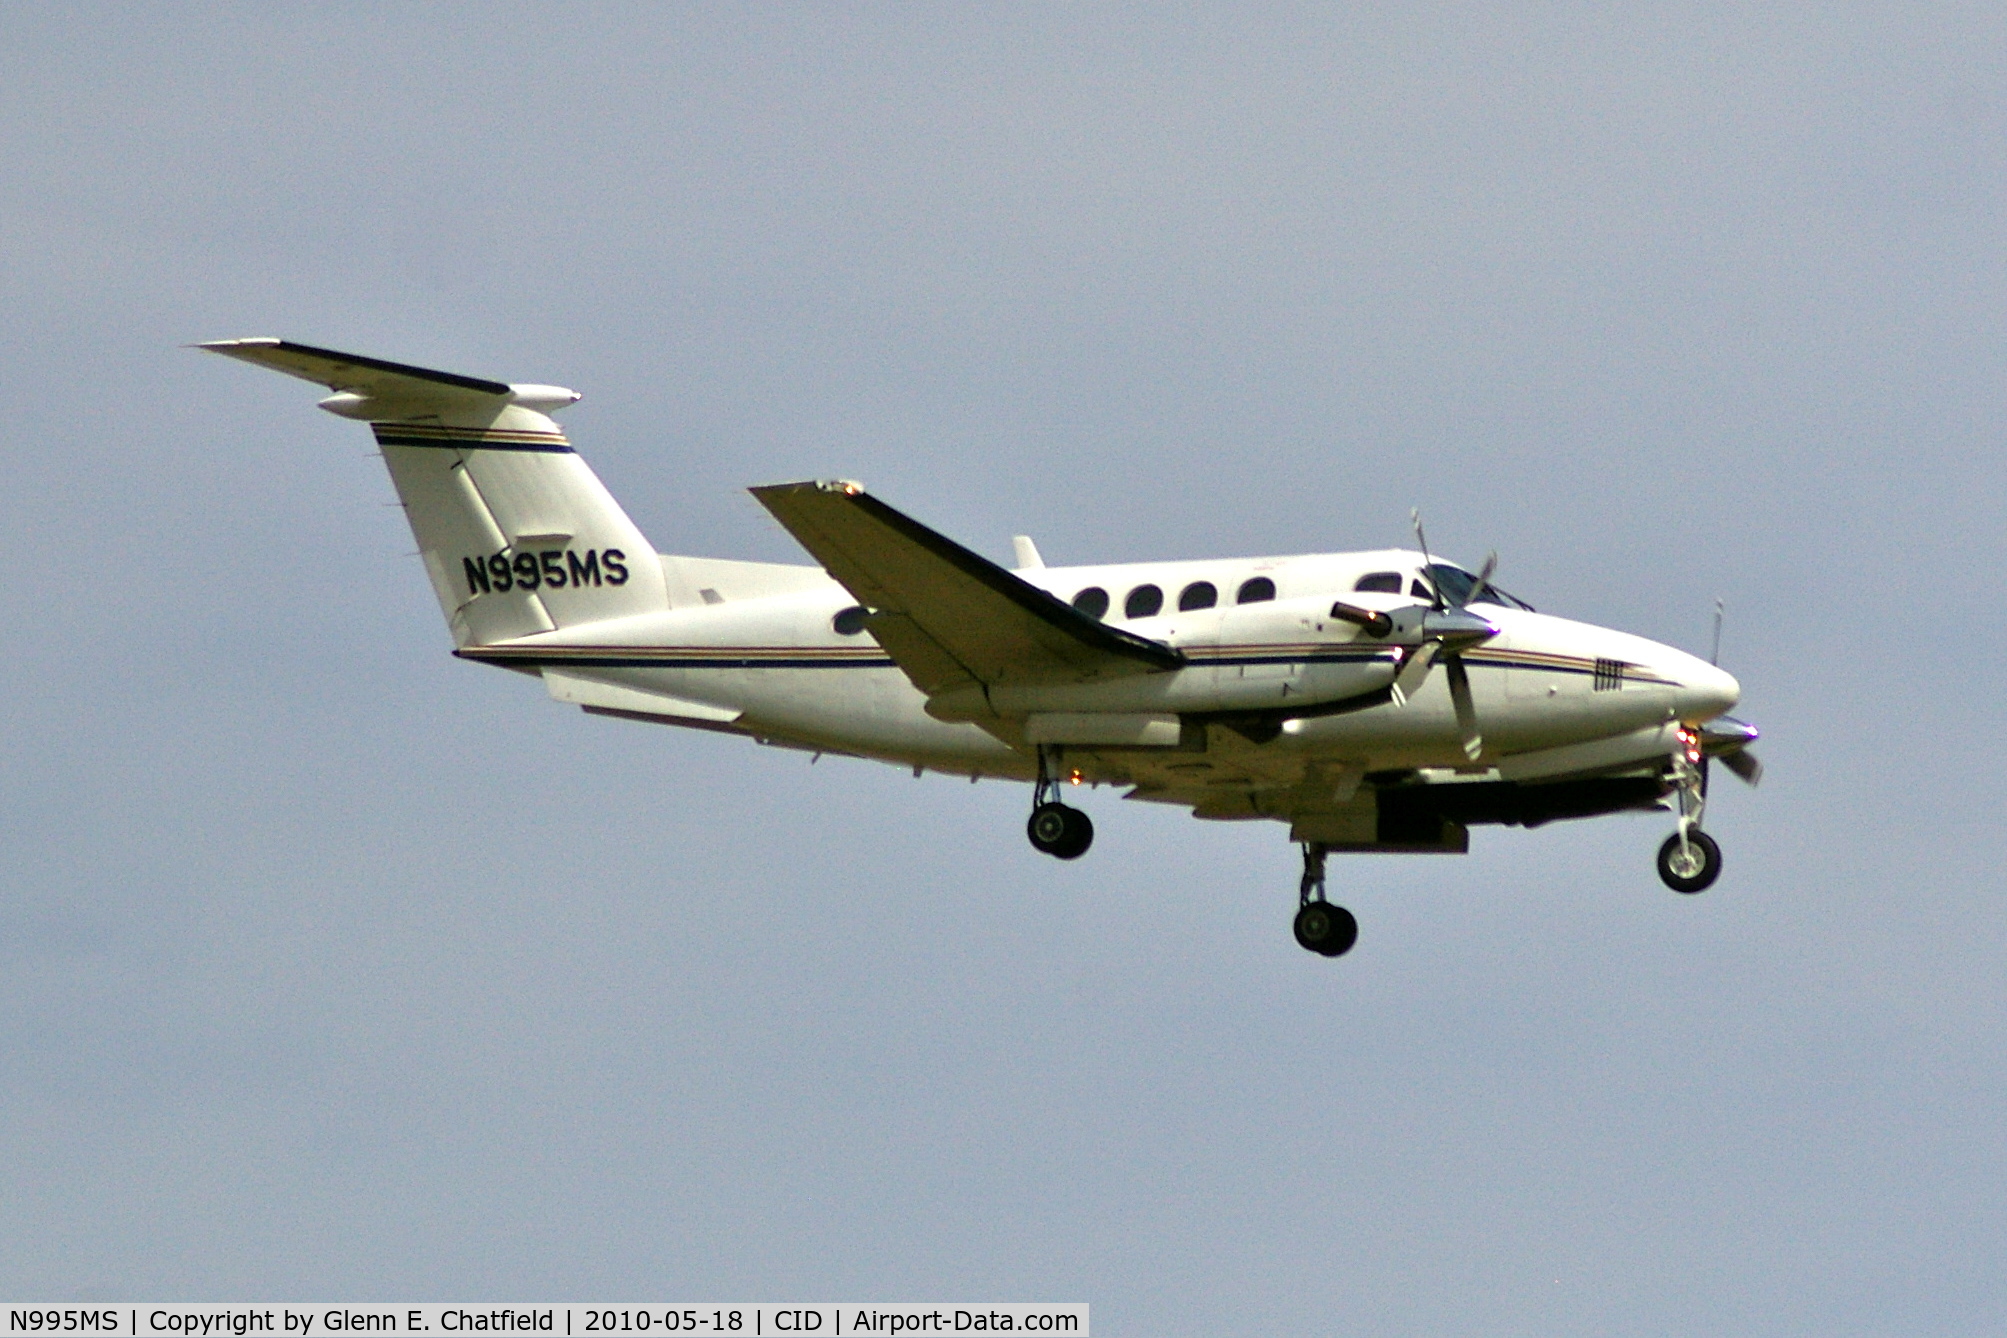 N995MS, 1981 Beech 200 C/N BB-931, Final approach, runway 9.